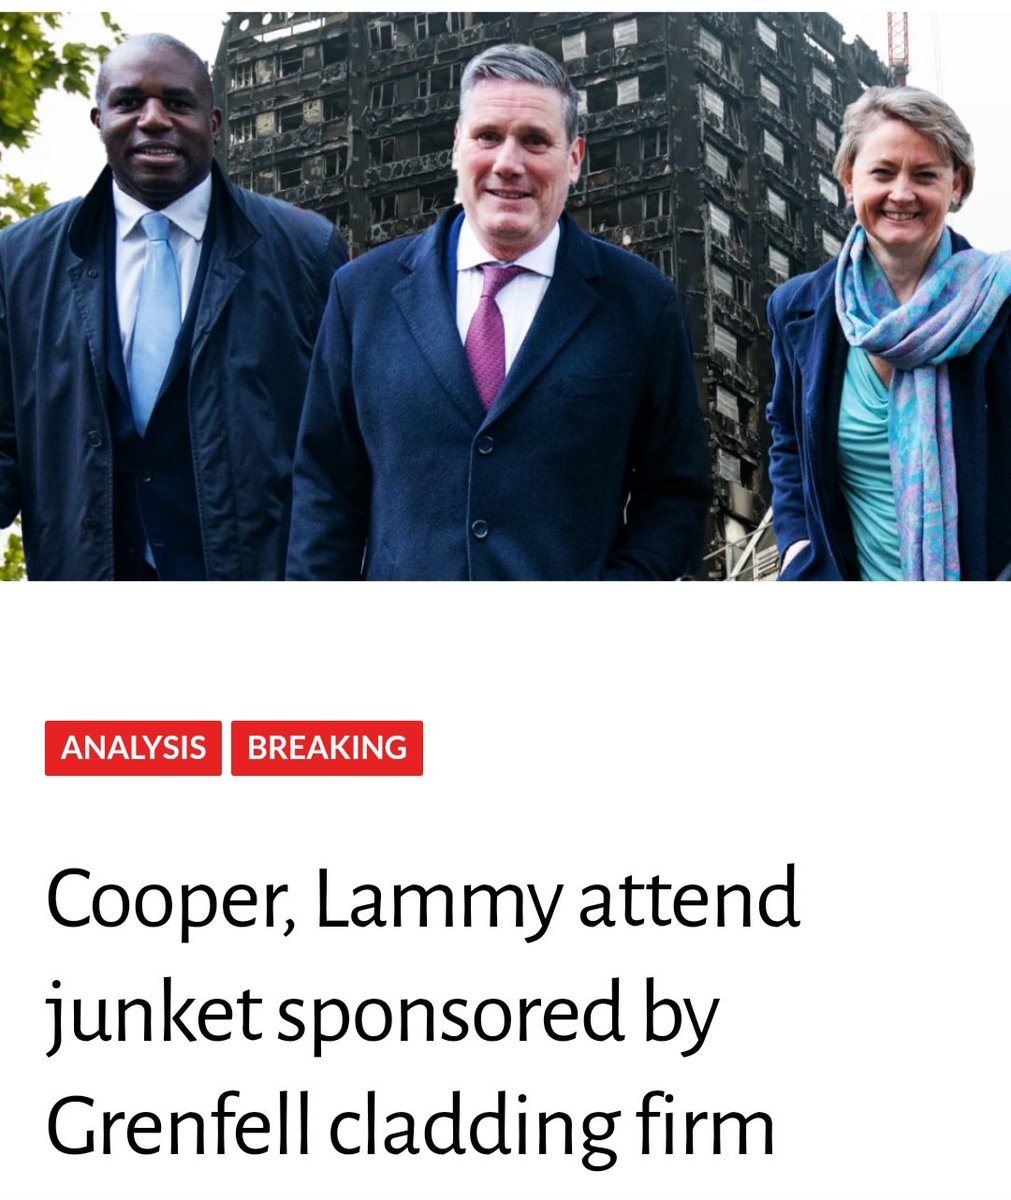 Cooper, Lammy attend junket sponsored by Grenfell cladding firm. 
skwawkbox.org/2022/08/24/coo…
#LammyOut